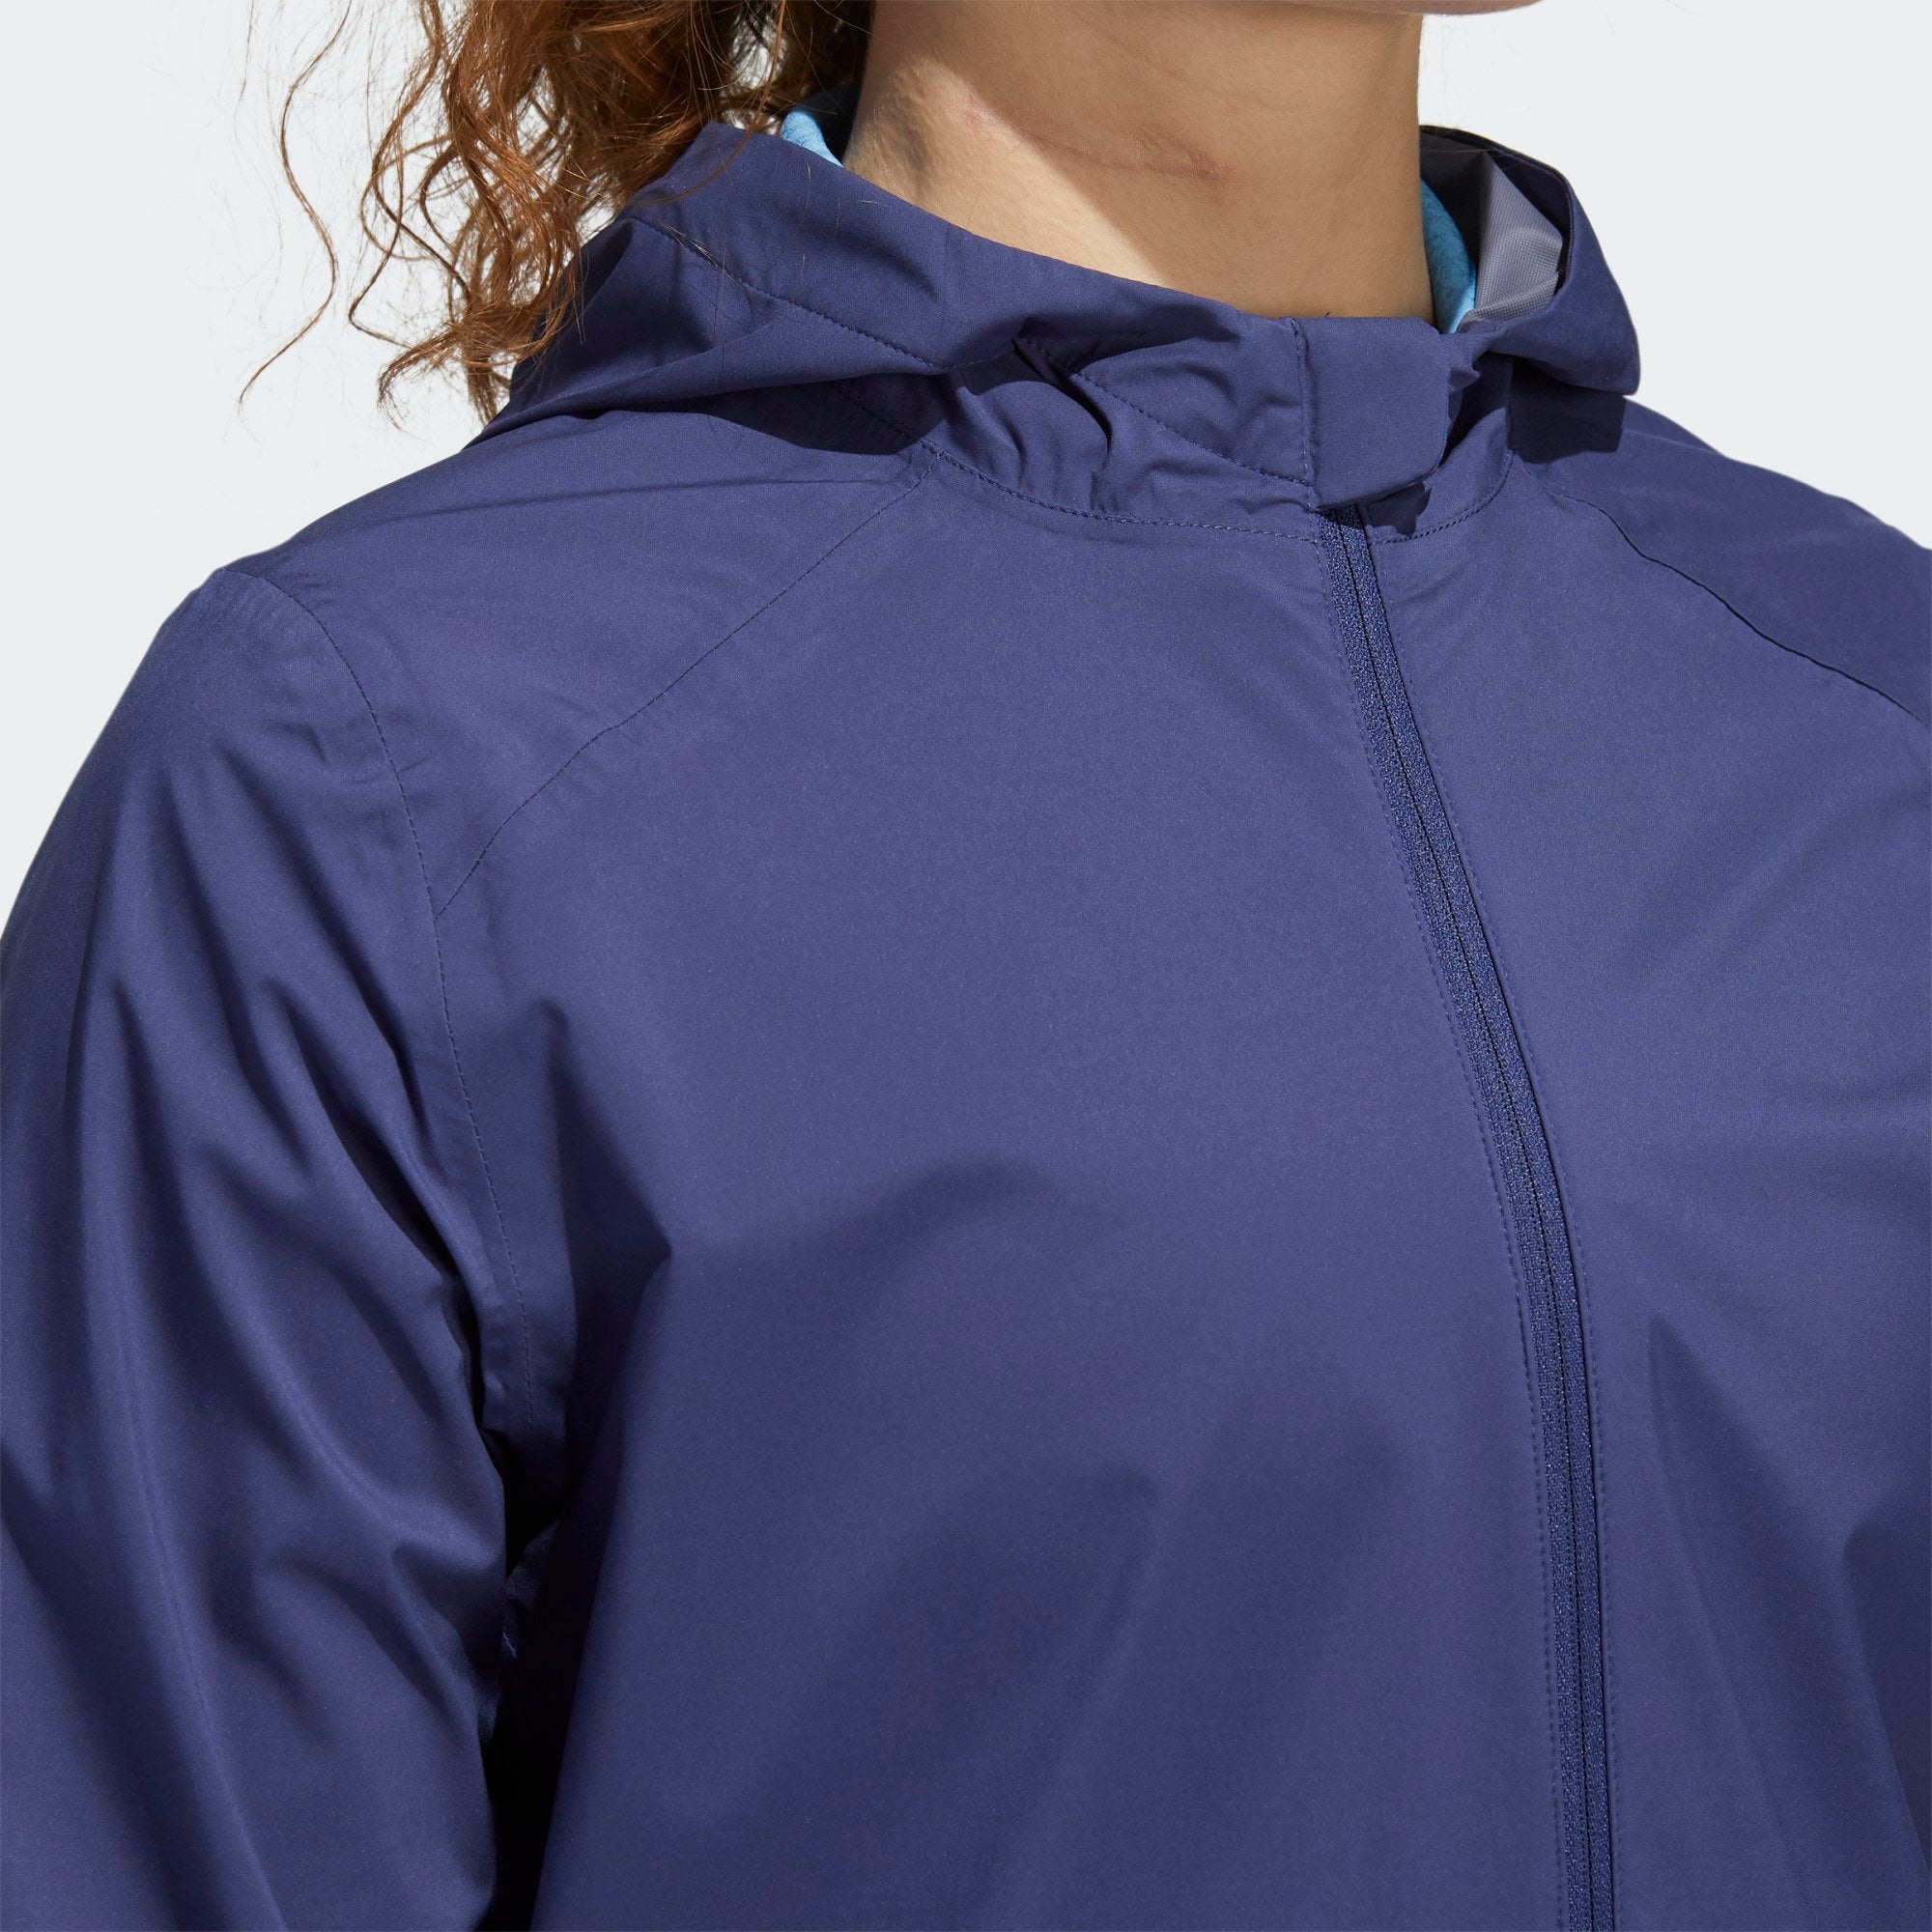 Adidas Womens Provisional Jacket - Navy